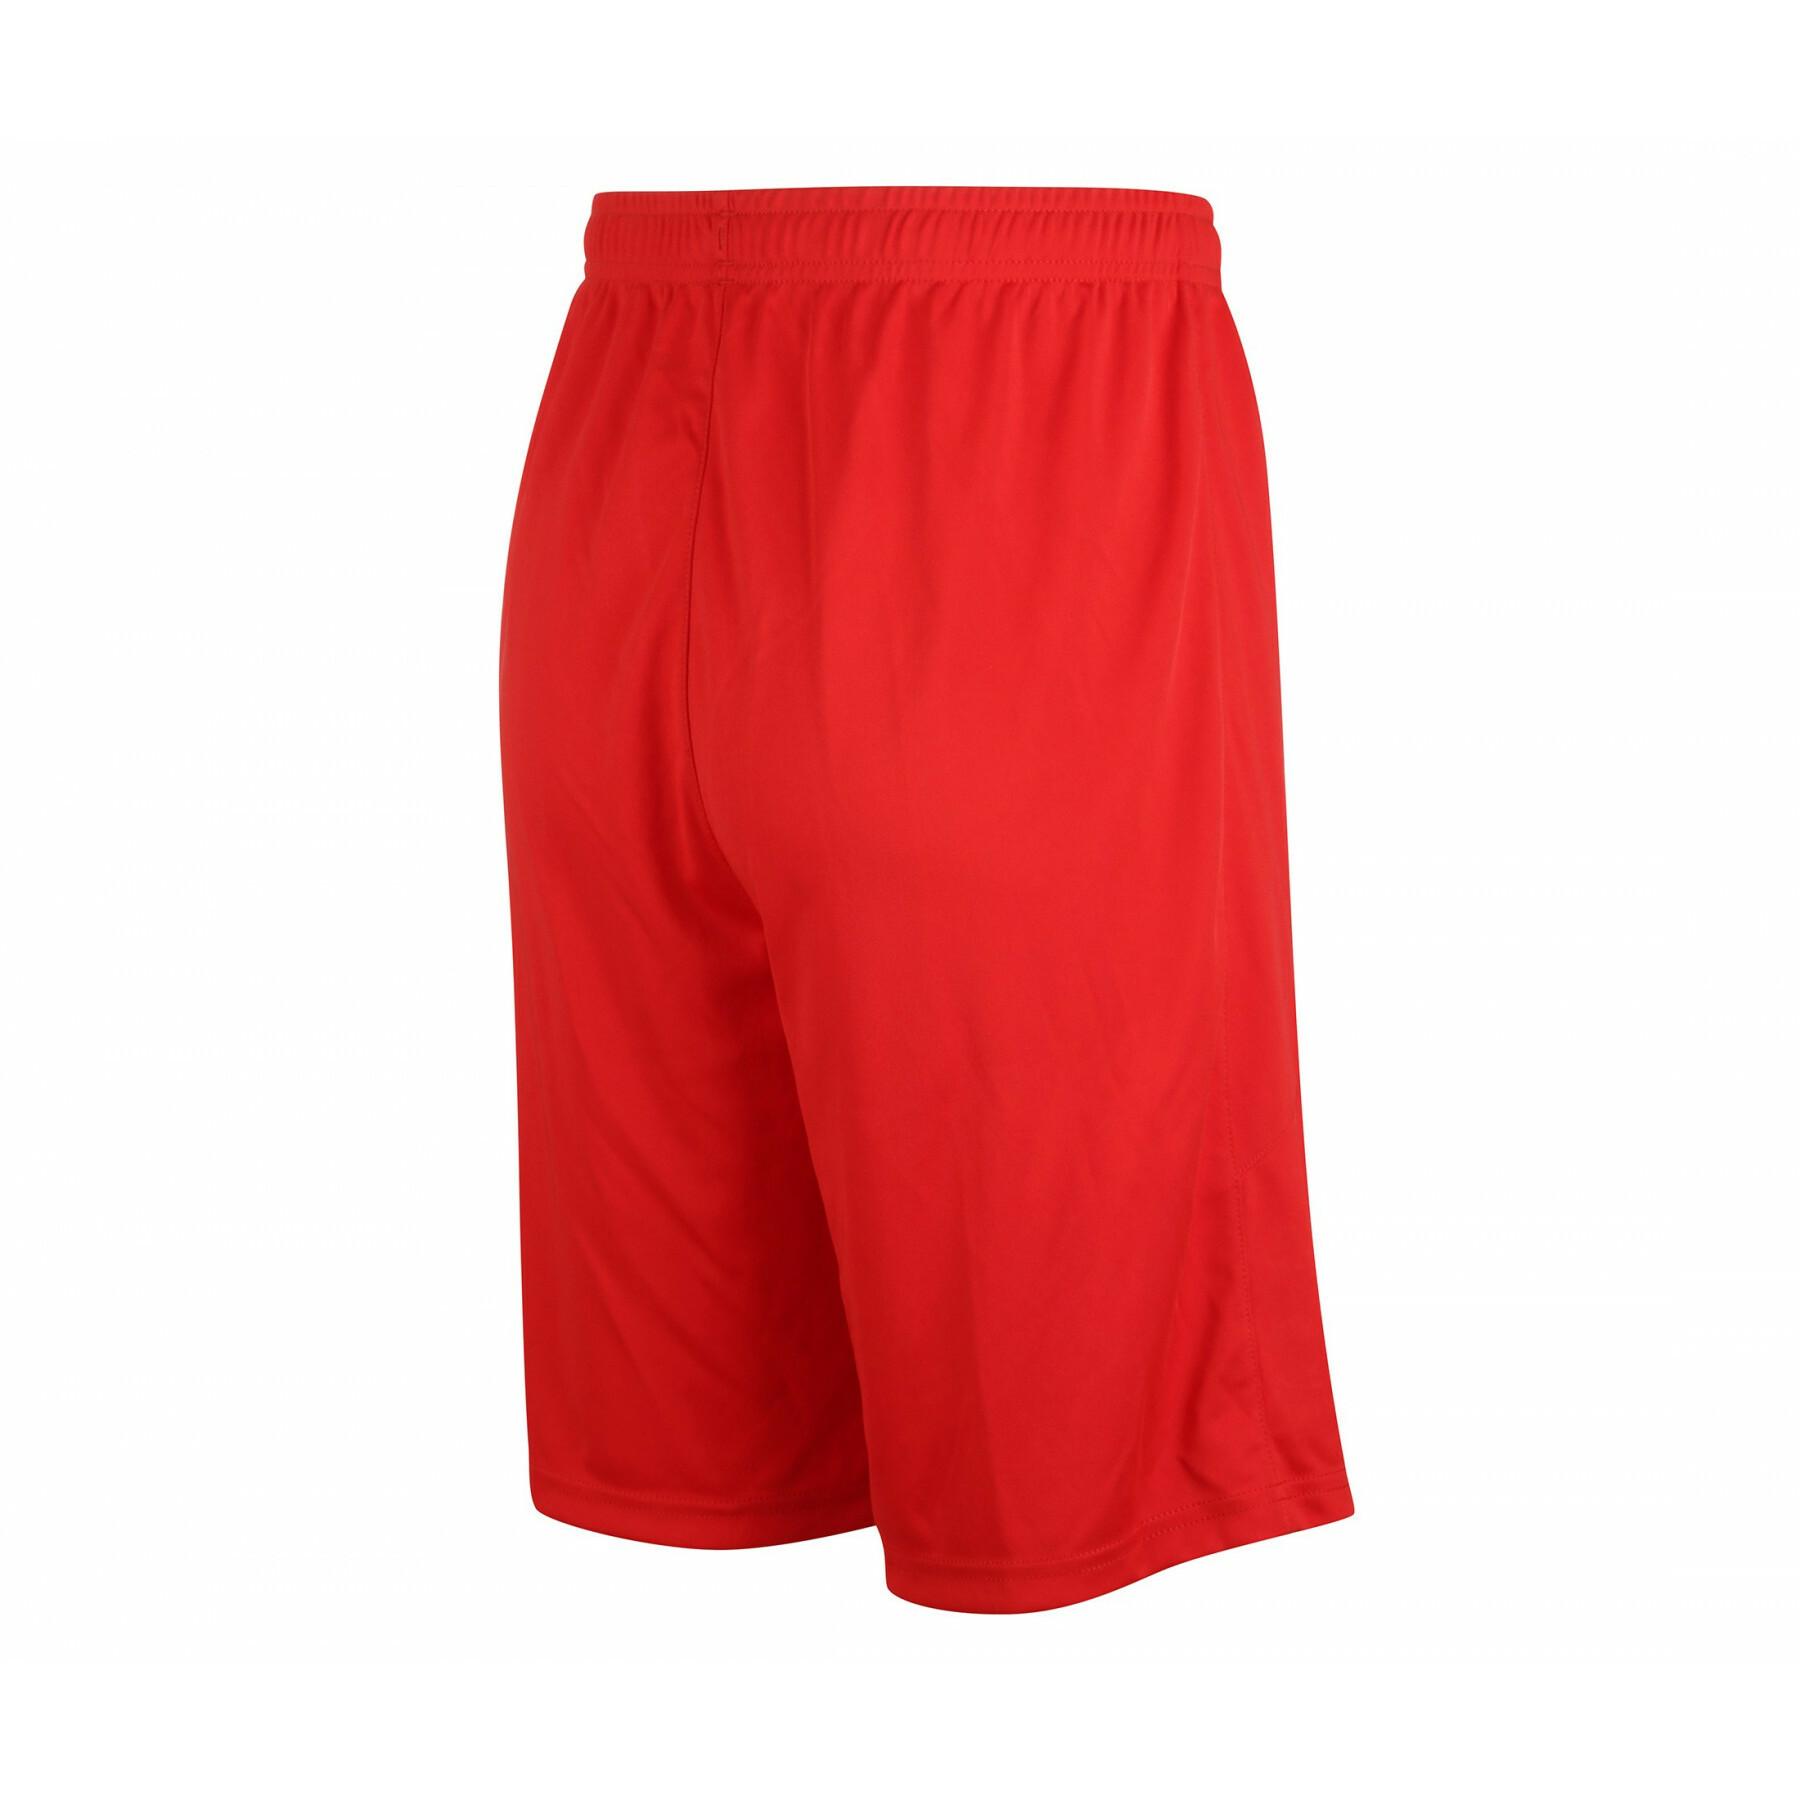 Goalkeeper shorts OM 2020/21